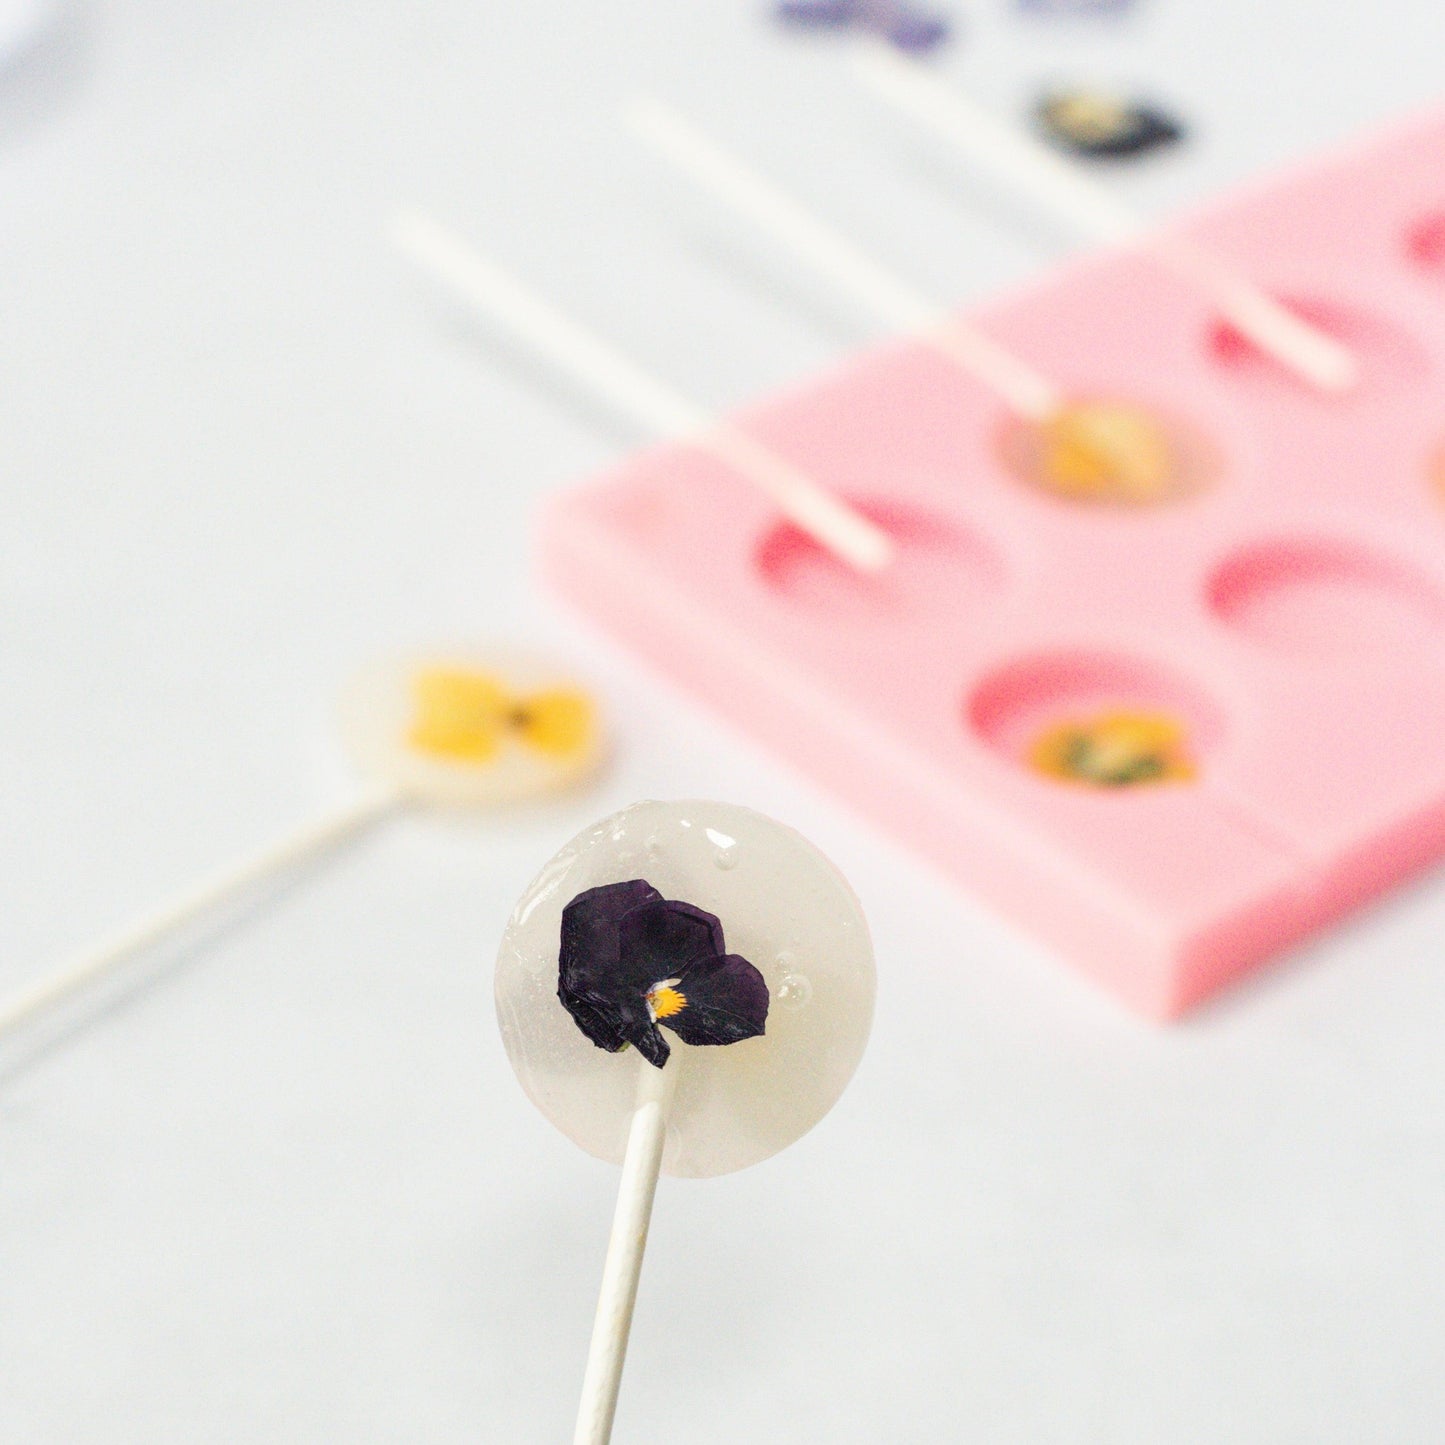 Wedding Favour Lollipop Making Kit